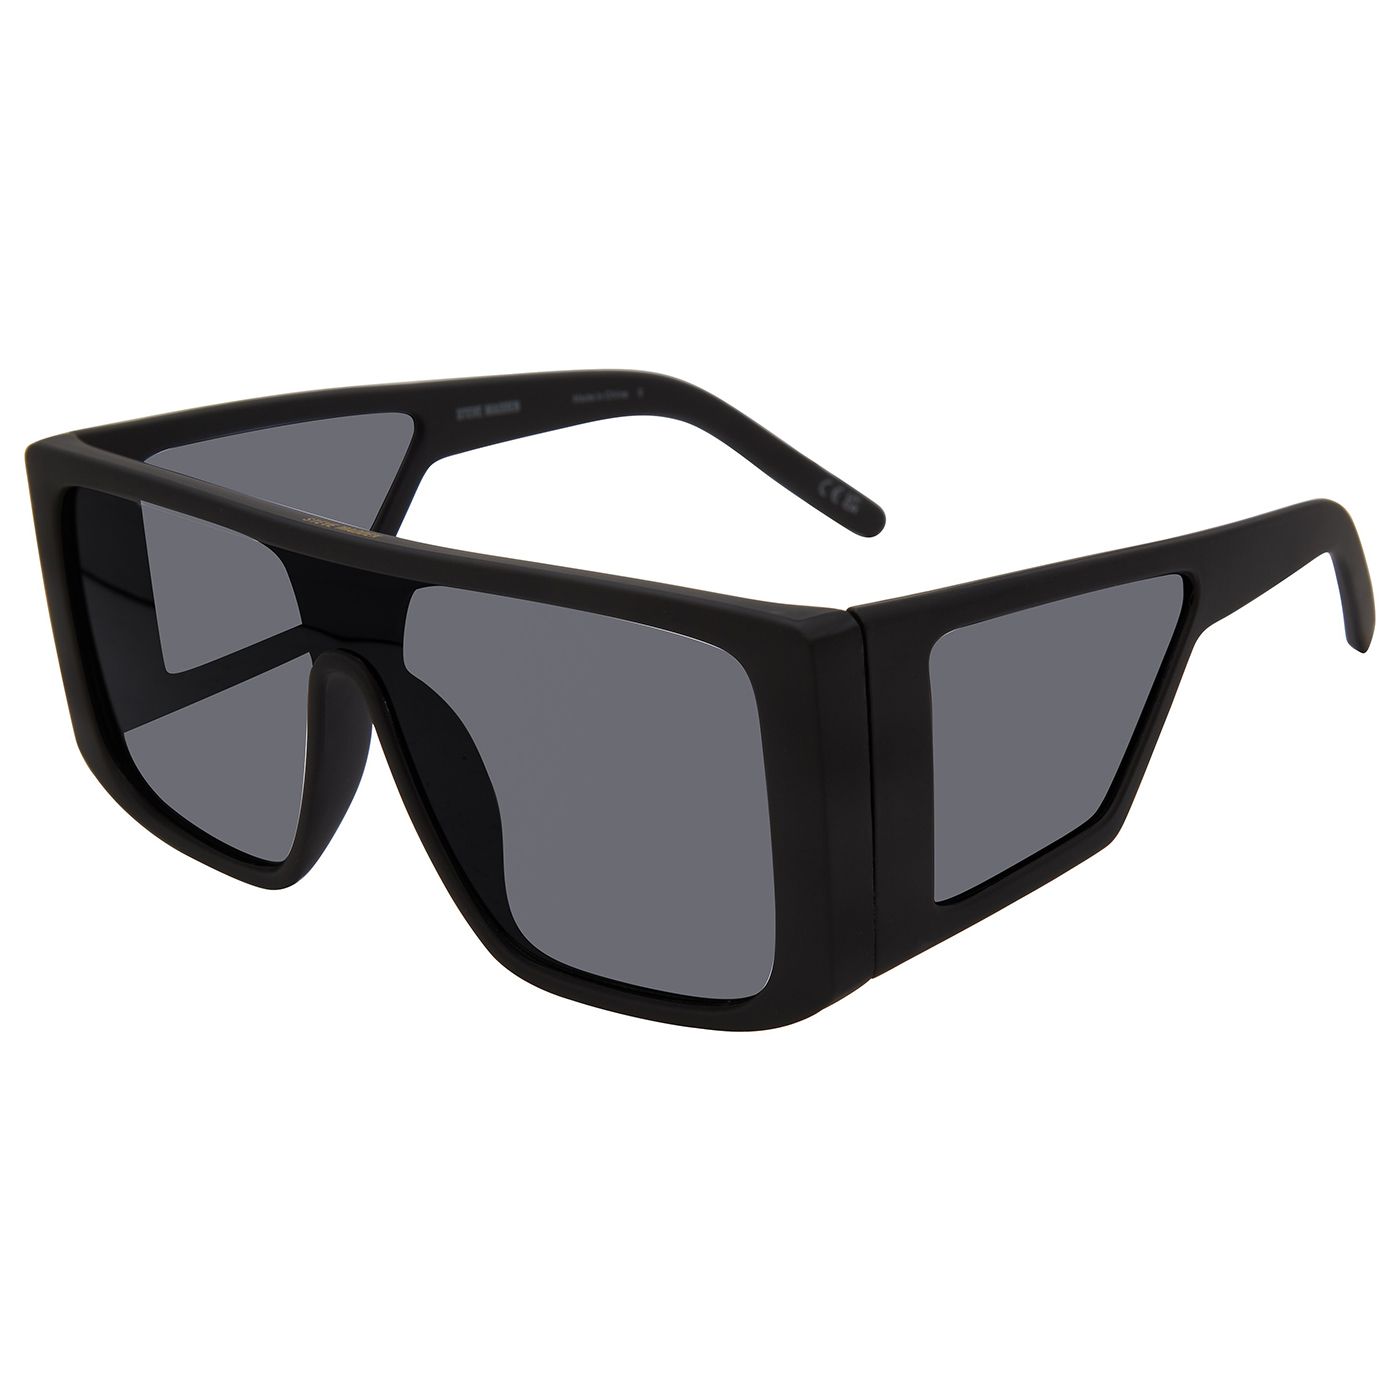 Colt/S Black Sunglasses